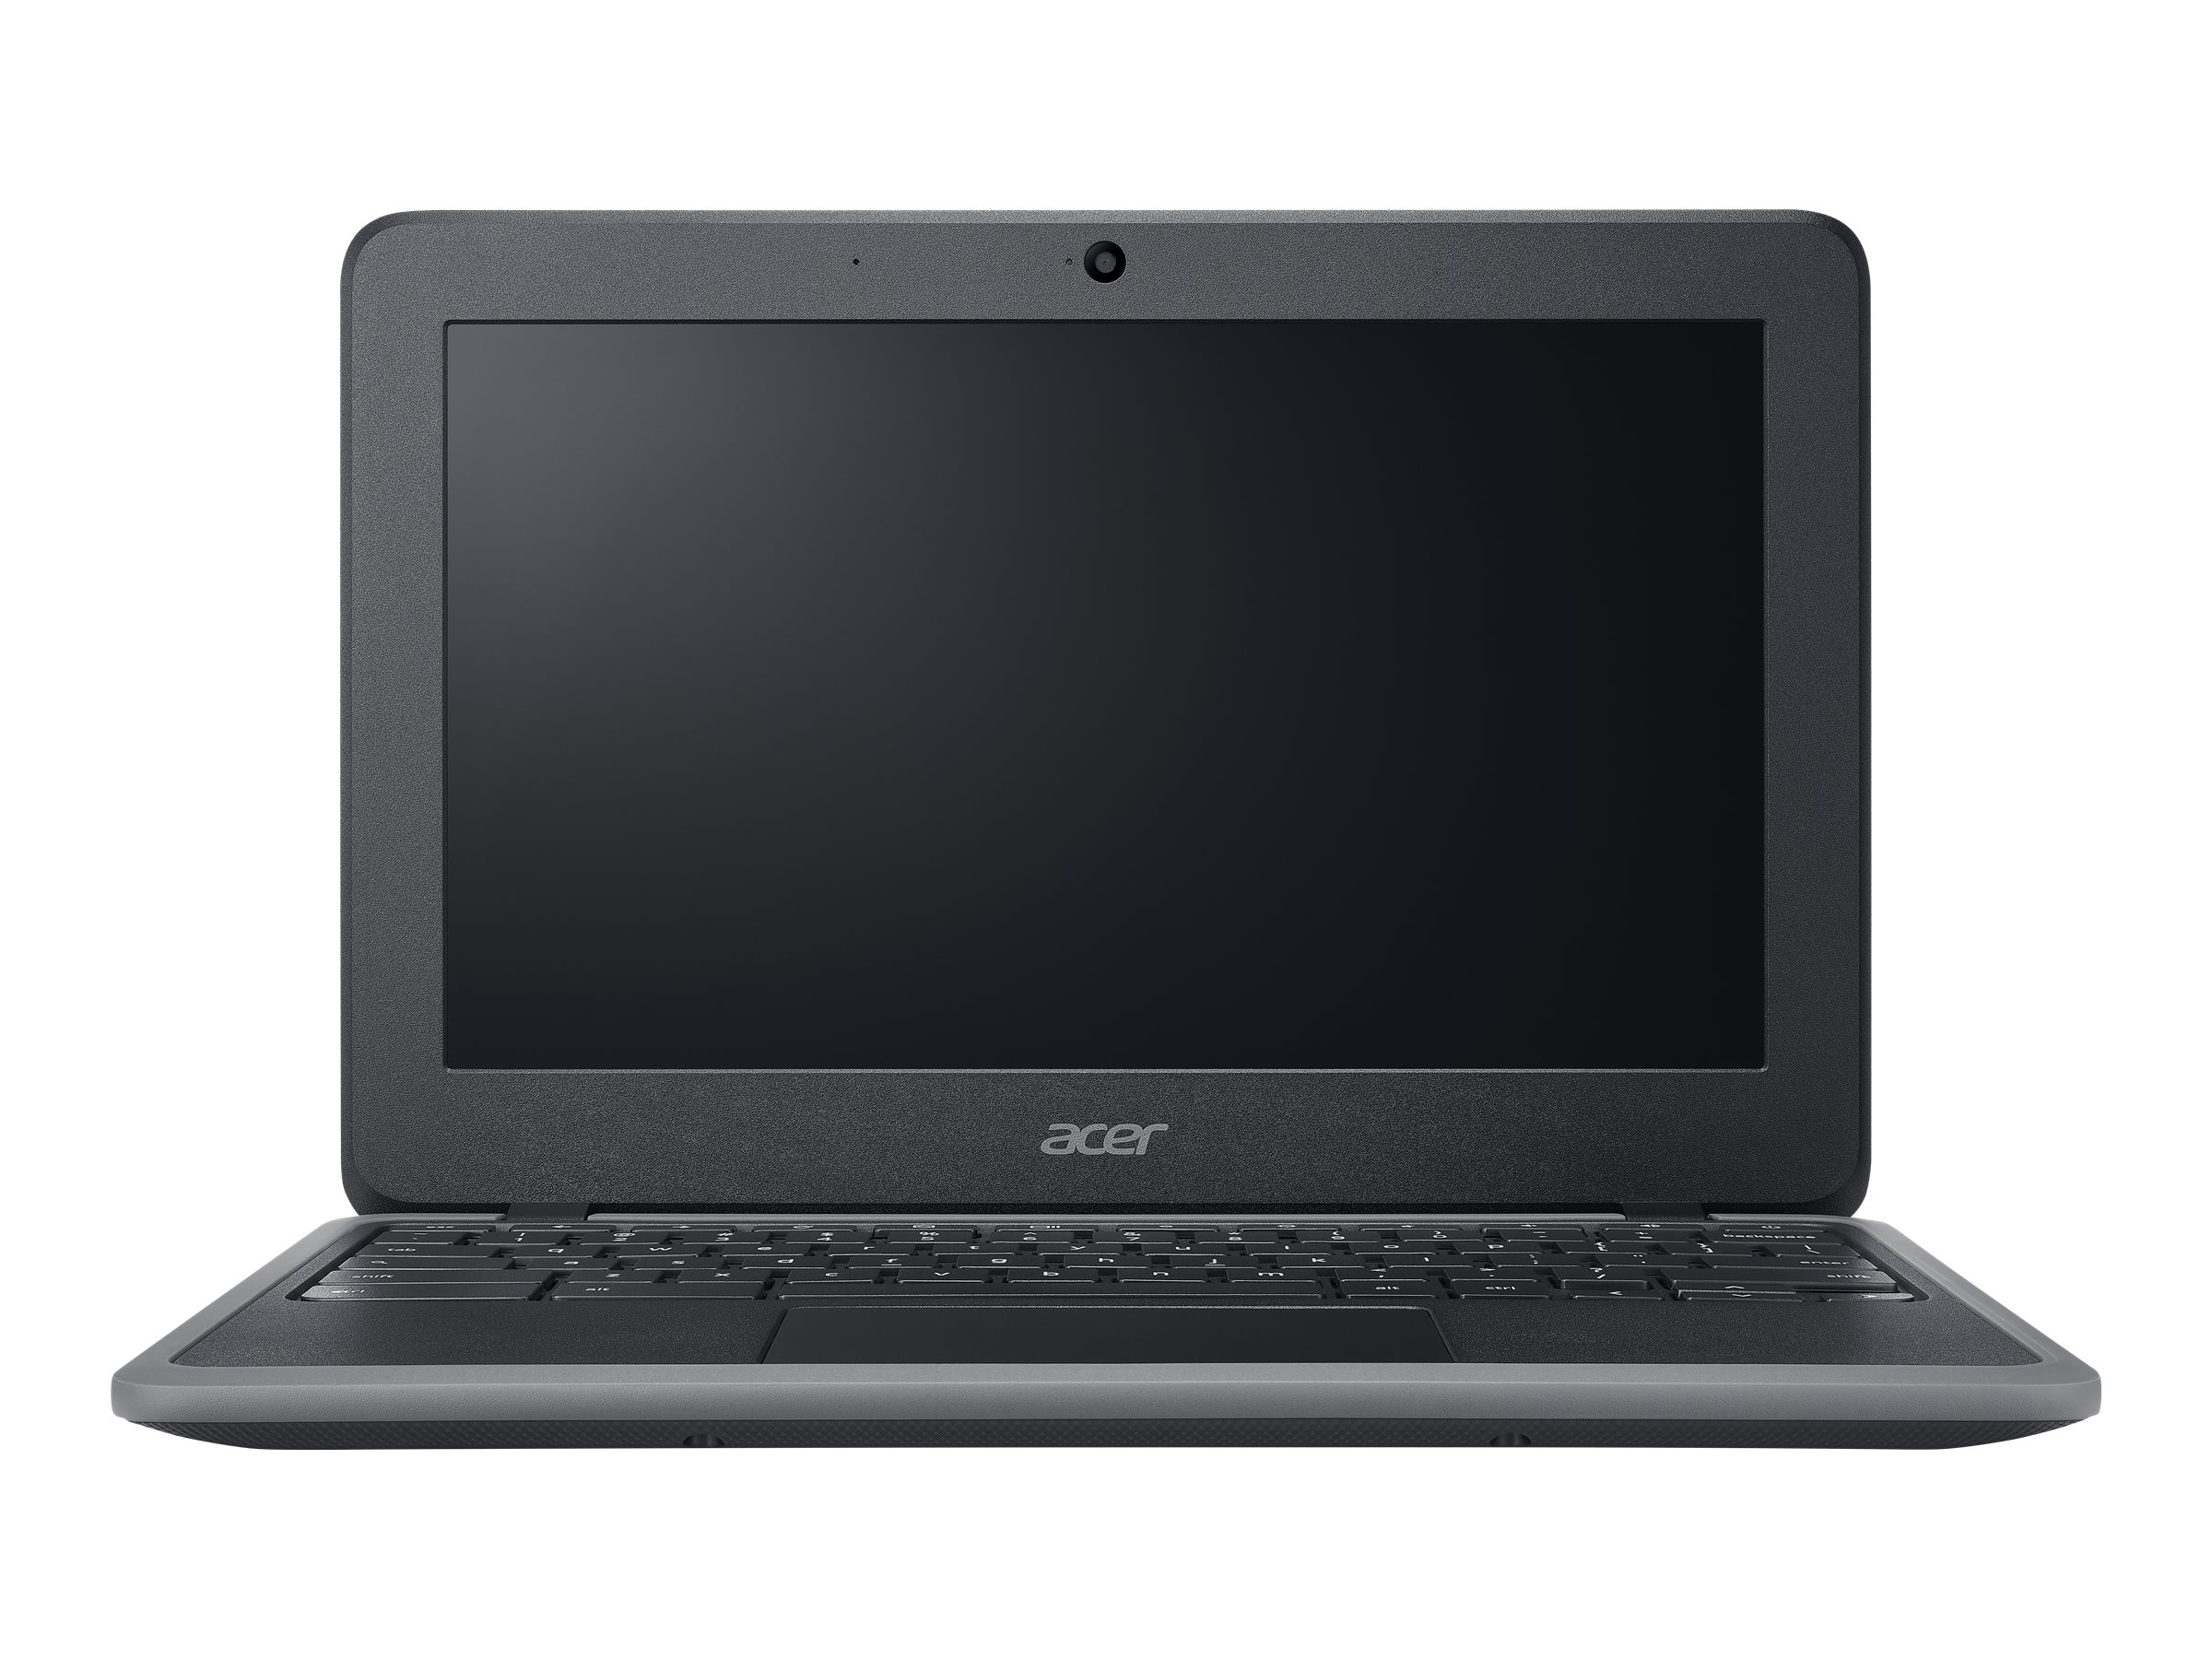 Acer Chromebook 11 (C732L)